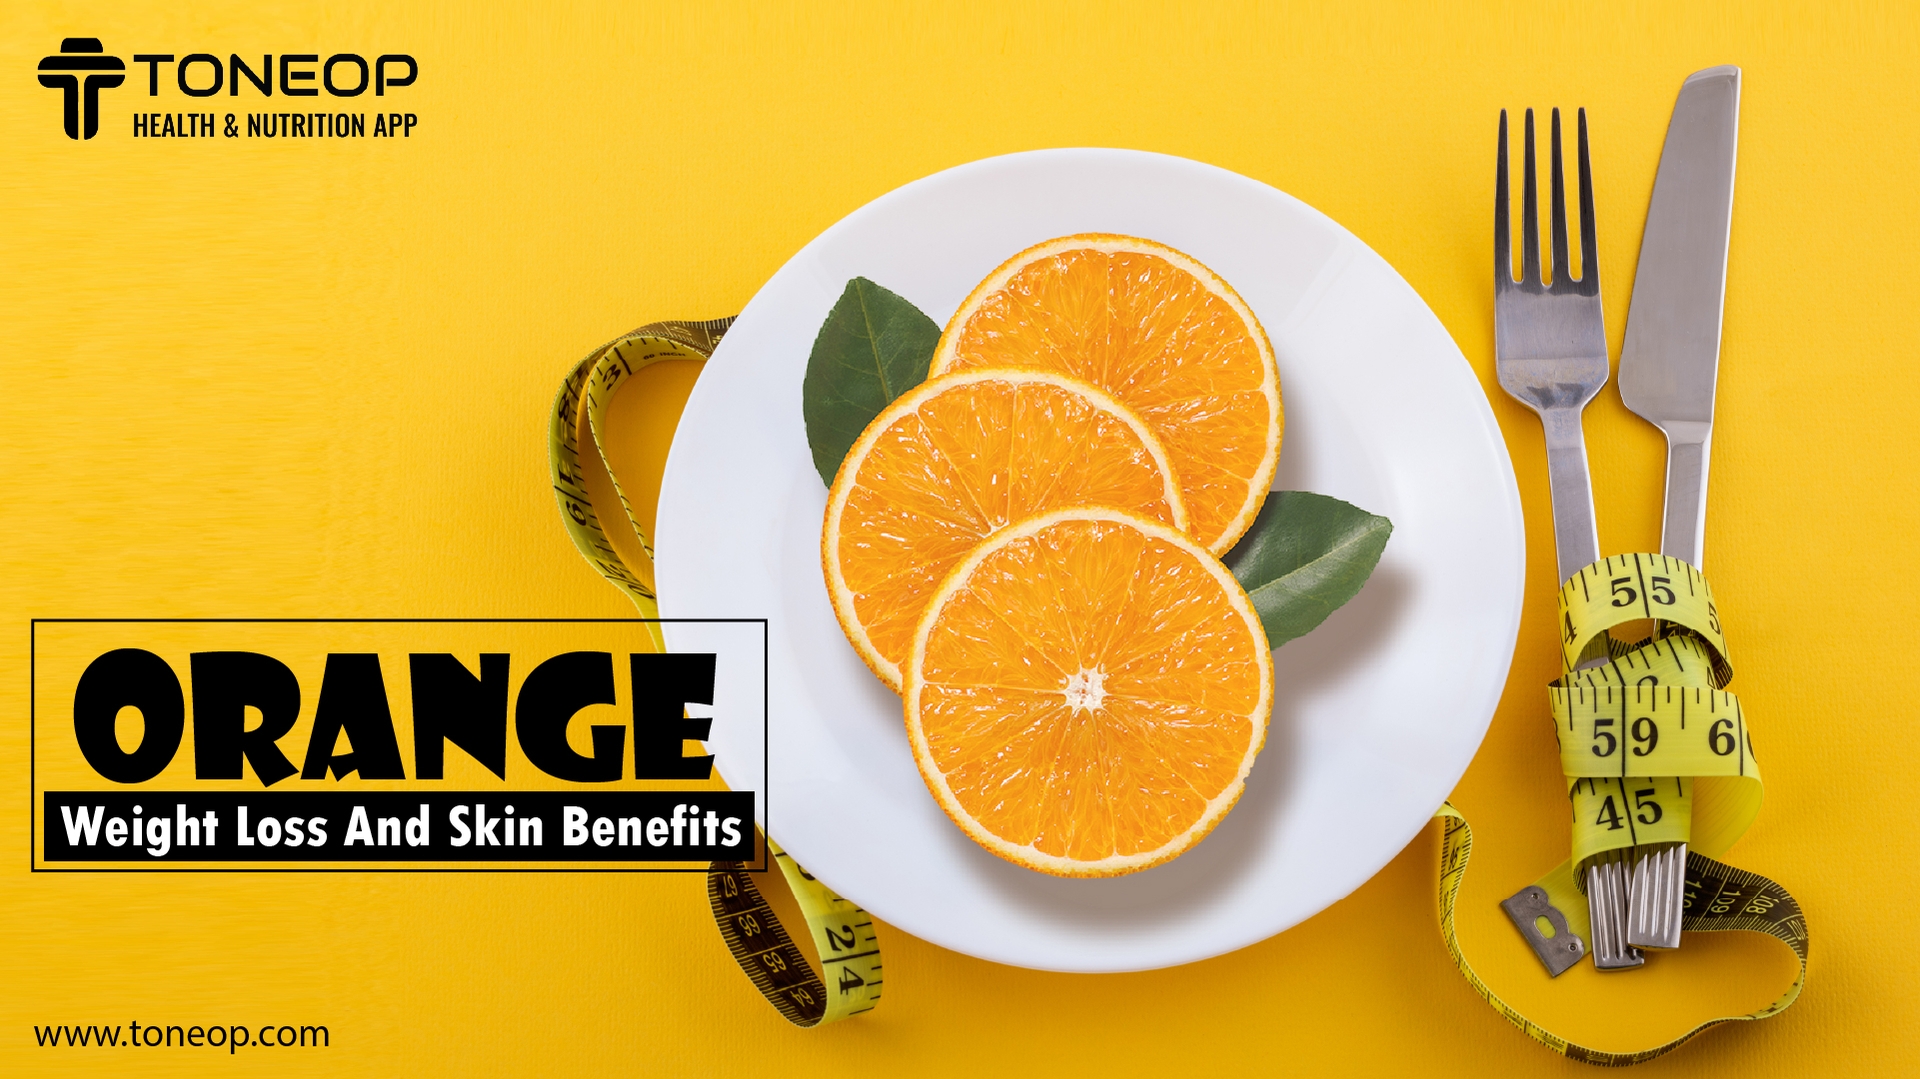 Orange: Weight Loss And Skin Benefits